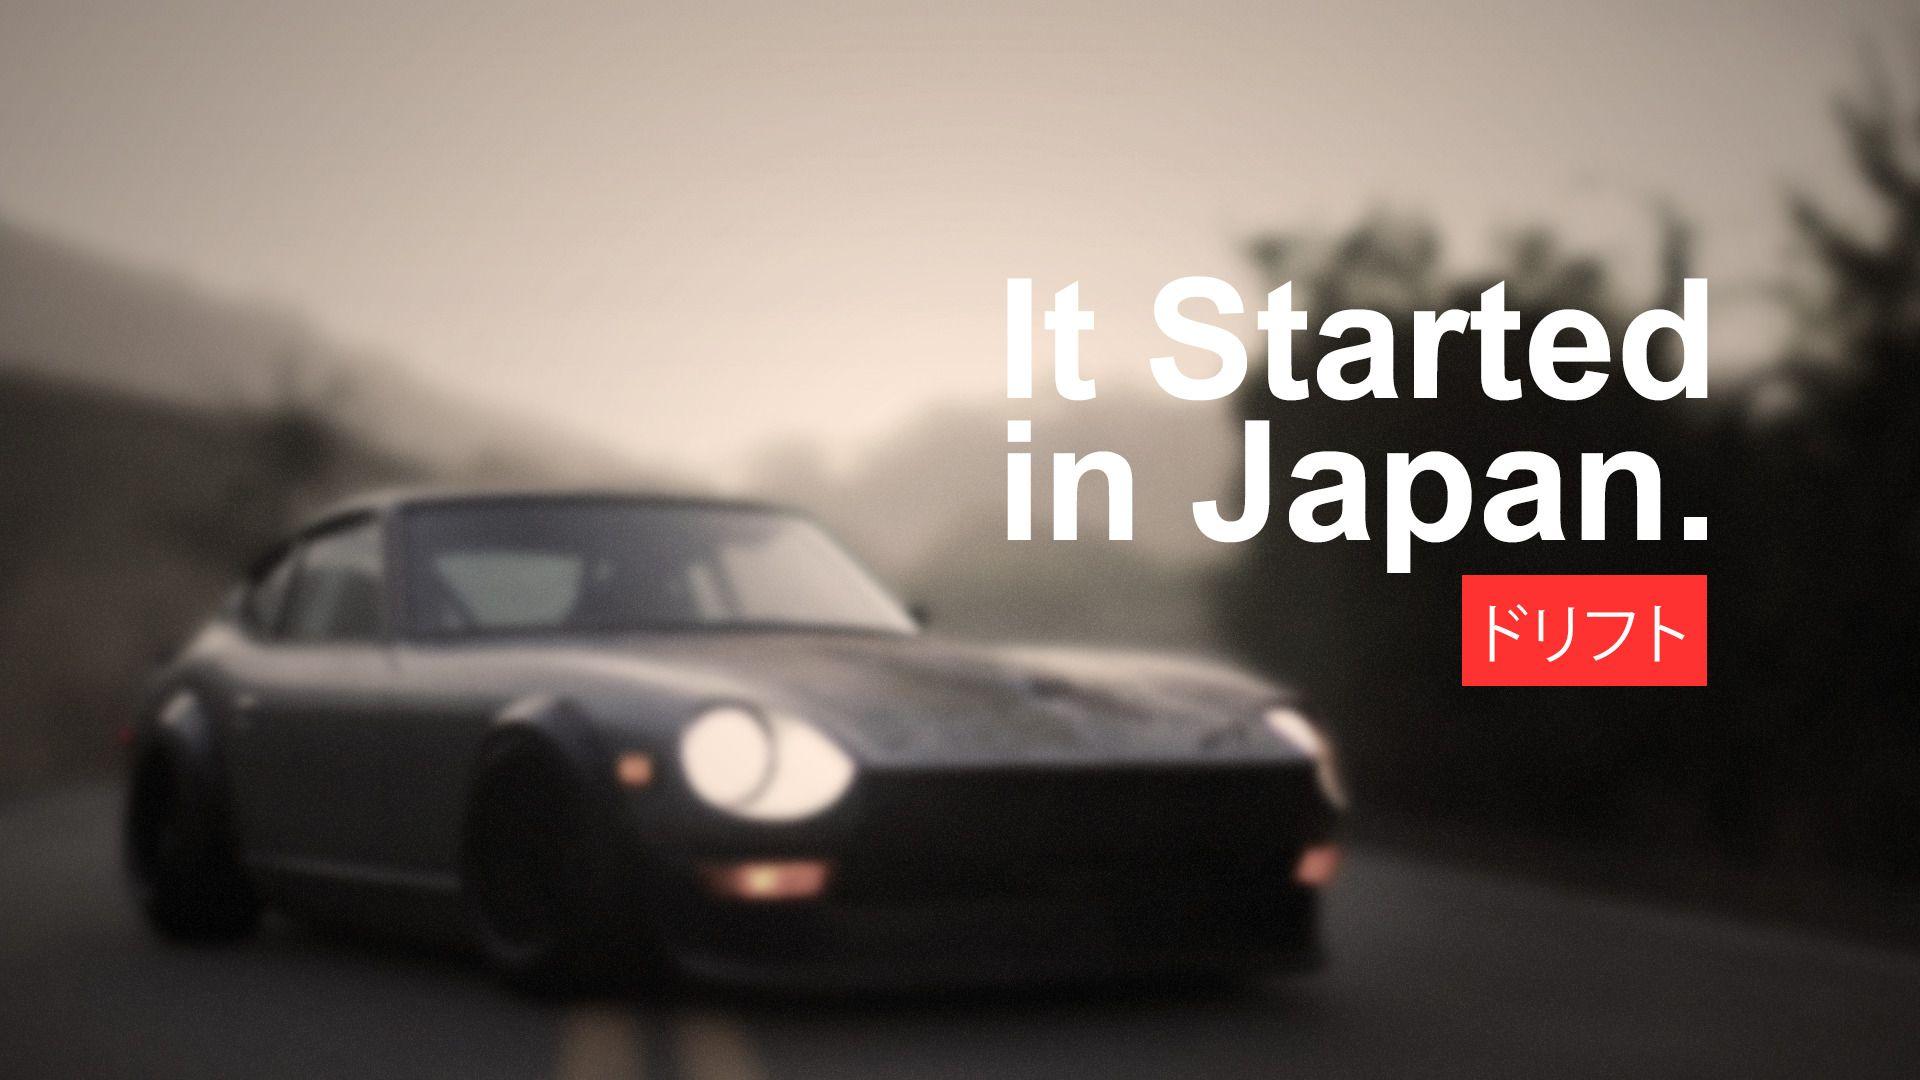 car, Japan, Drift, Drifting, Racing, Vehicle, Japanese Cars, Import